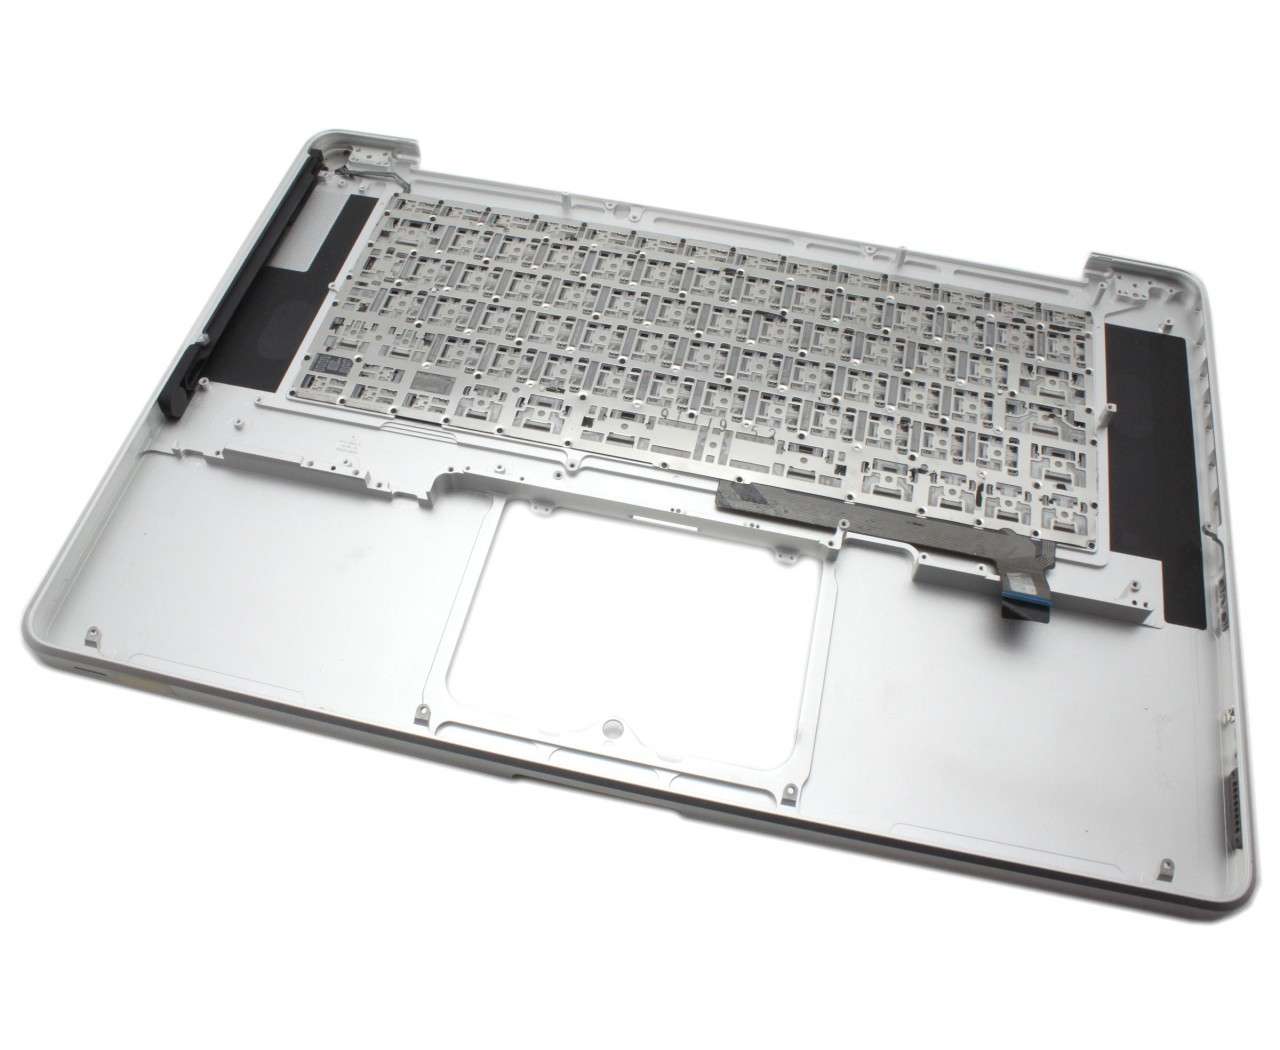 Tastatura Apple MacBook Pro 15 MB985LL A Neagra cu Palmrest Argintiu Refurbished Apple Apple